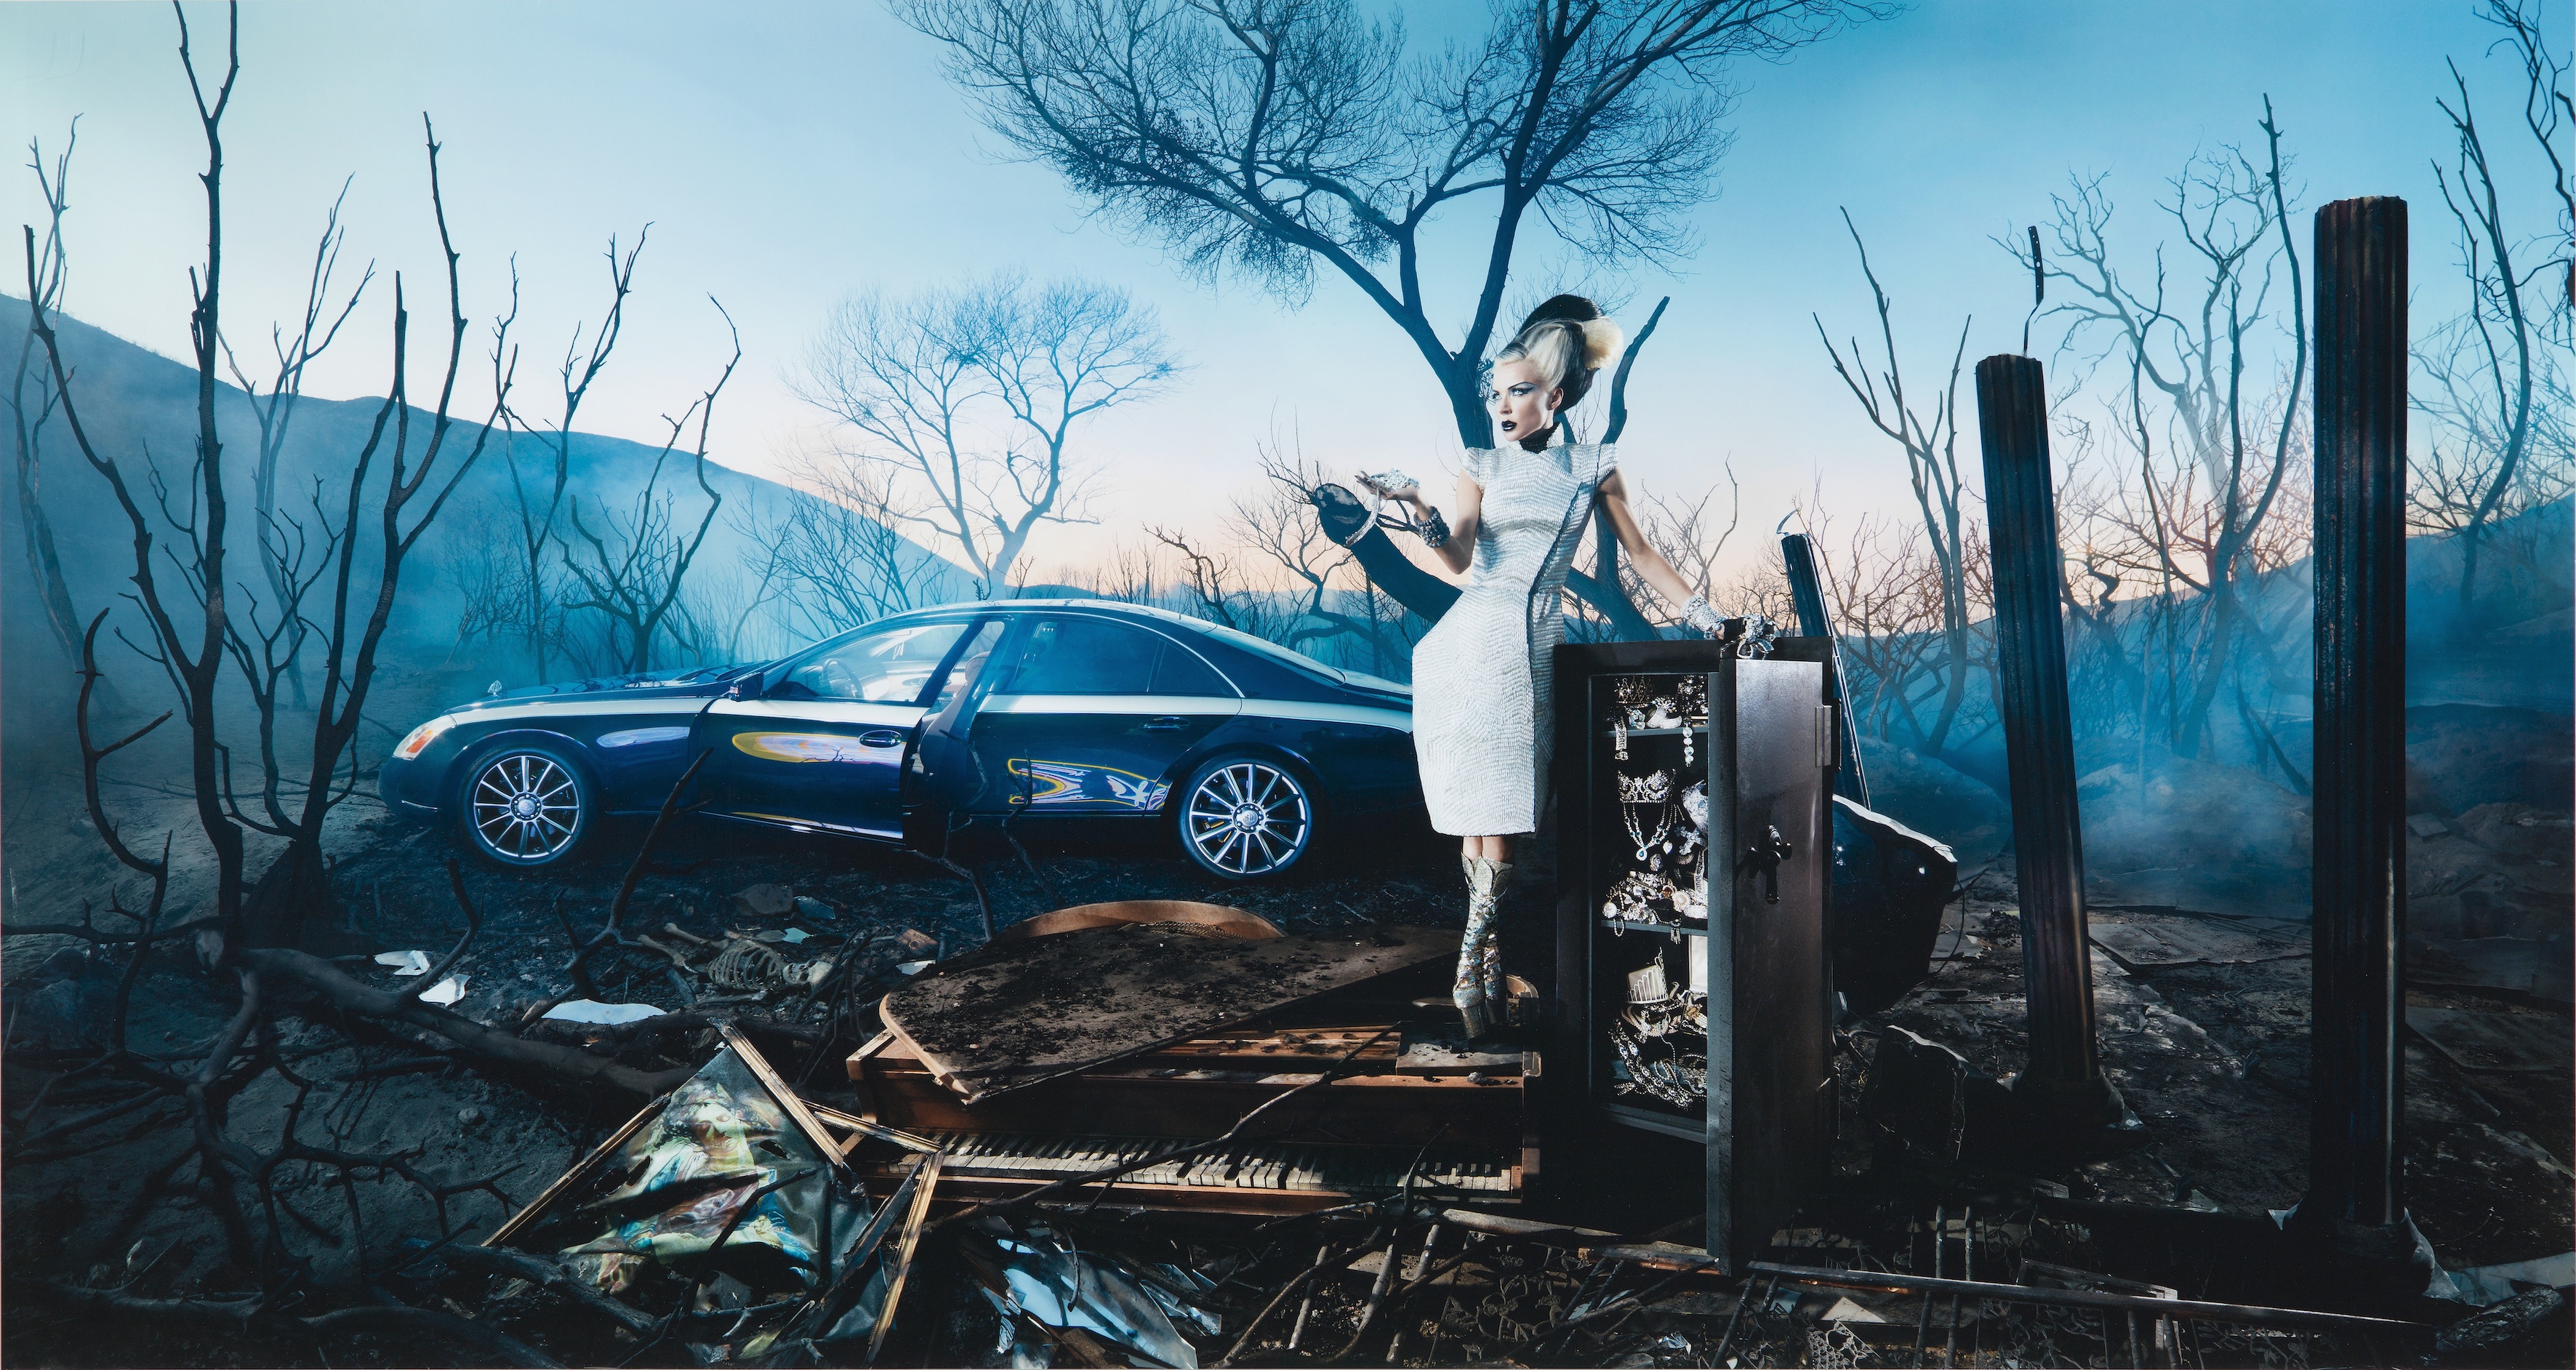 David LaChapelle, Exposure of Luxury